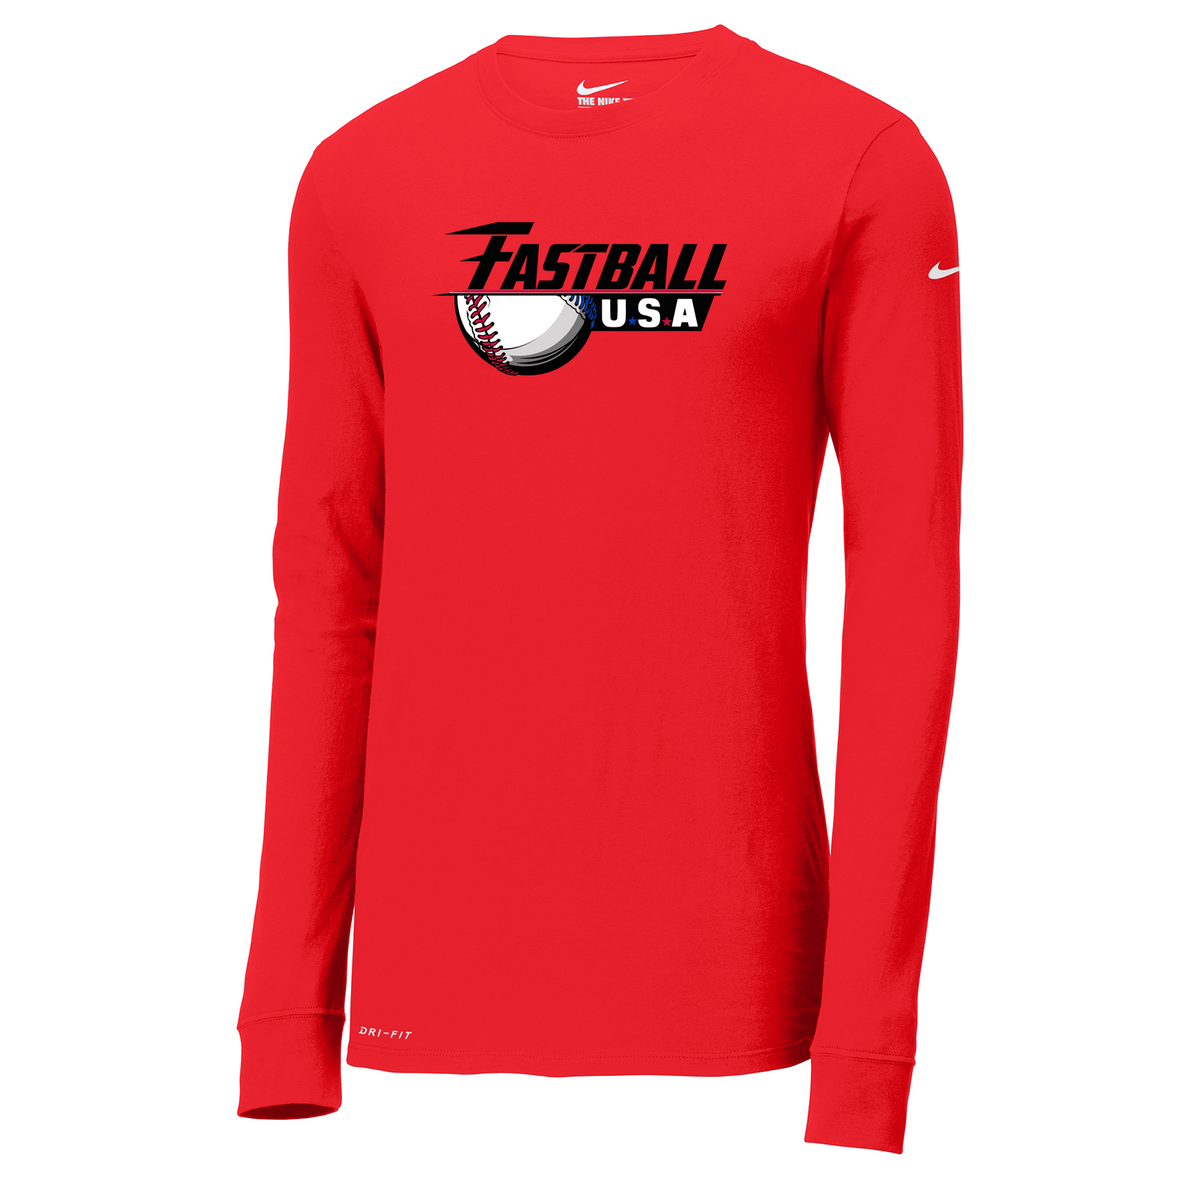 Fastball USA Academy Baseball Nike Dri-FIT Long Sleeve Tee